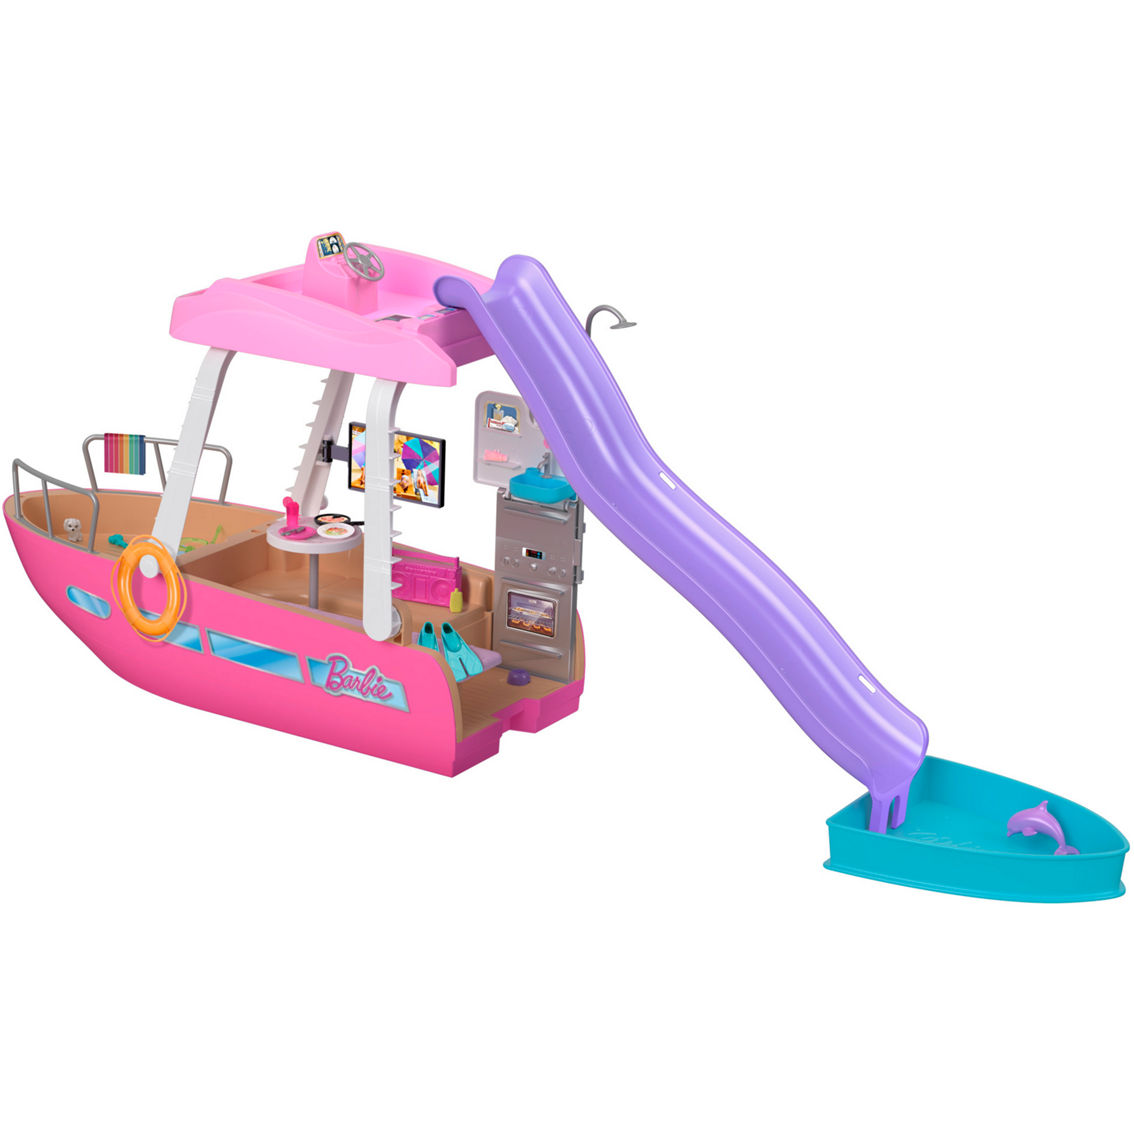 Barbie Dream Boat Playset - Image 4 of 5